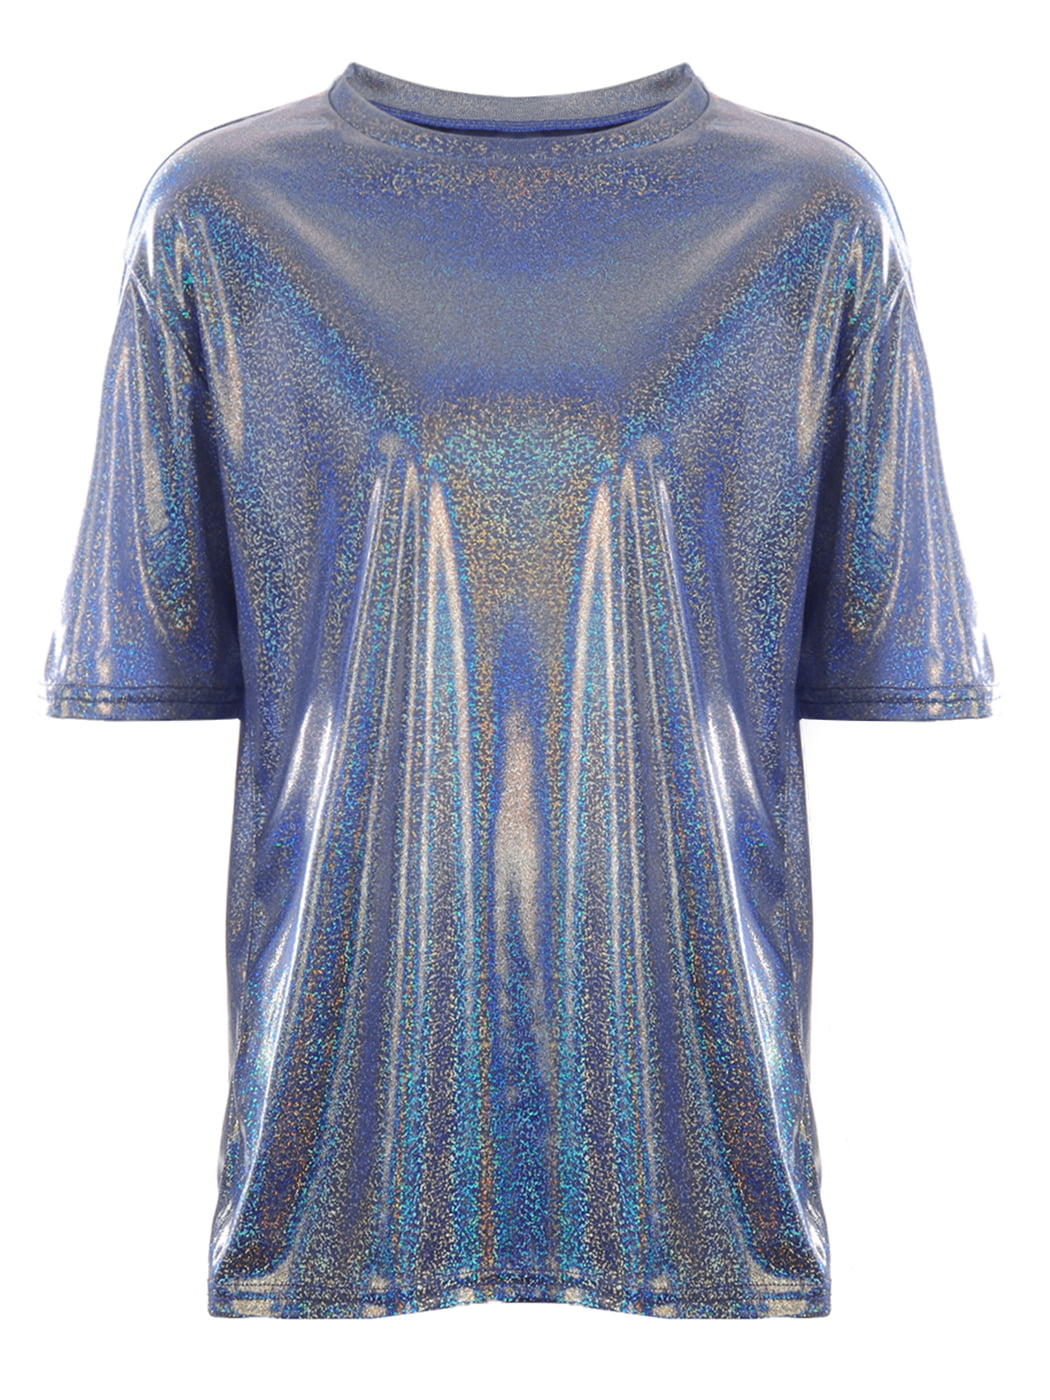 Feinuhan - Women's Holographic Metallic T-Shirt Shimmer Sparkle Top ...